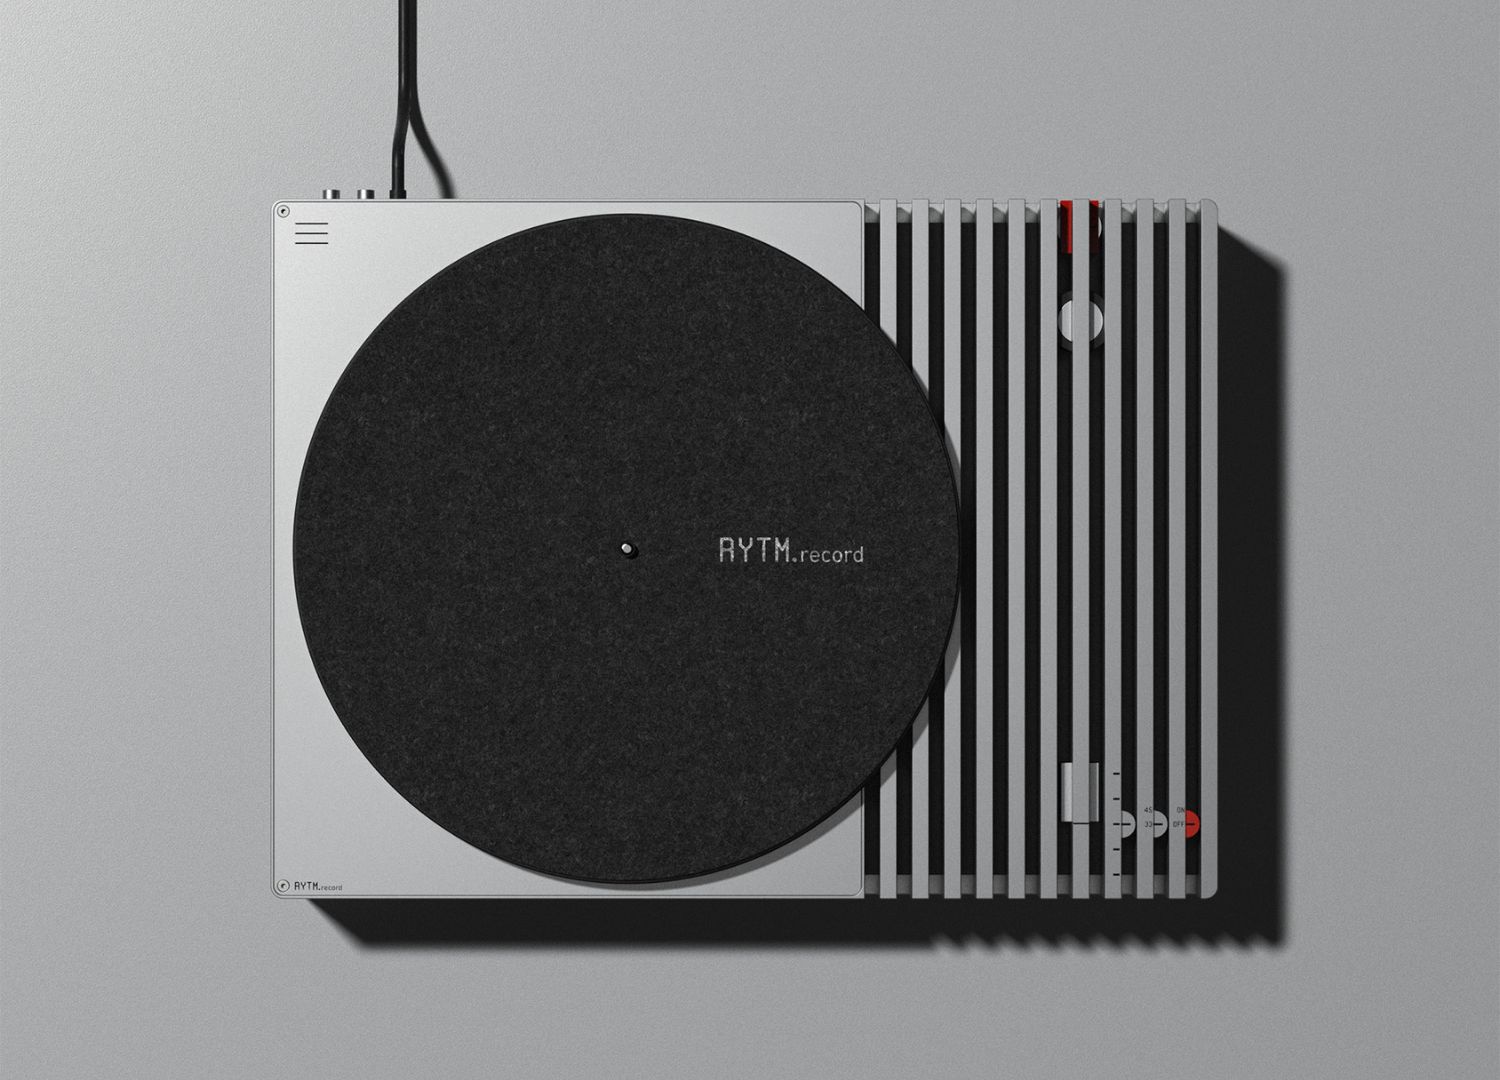 RYTM record player by Jorge Paez